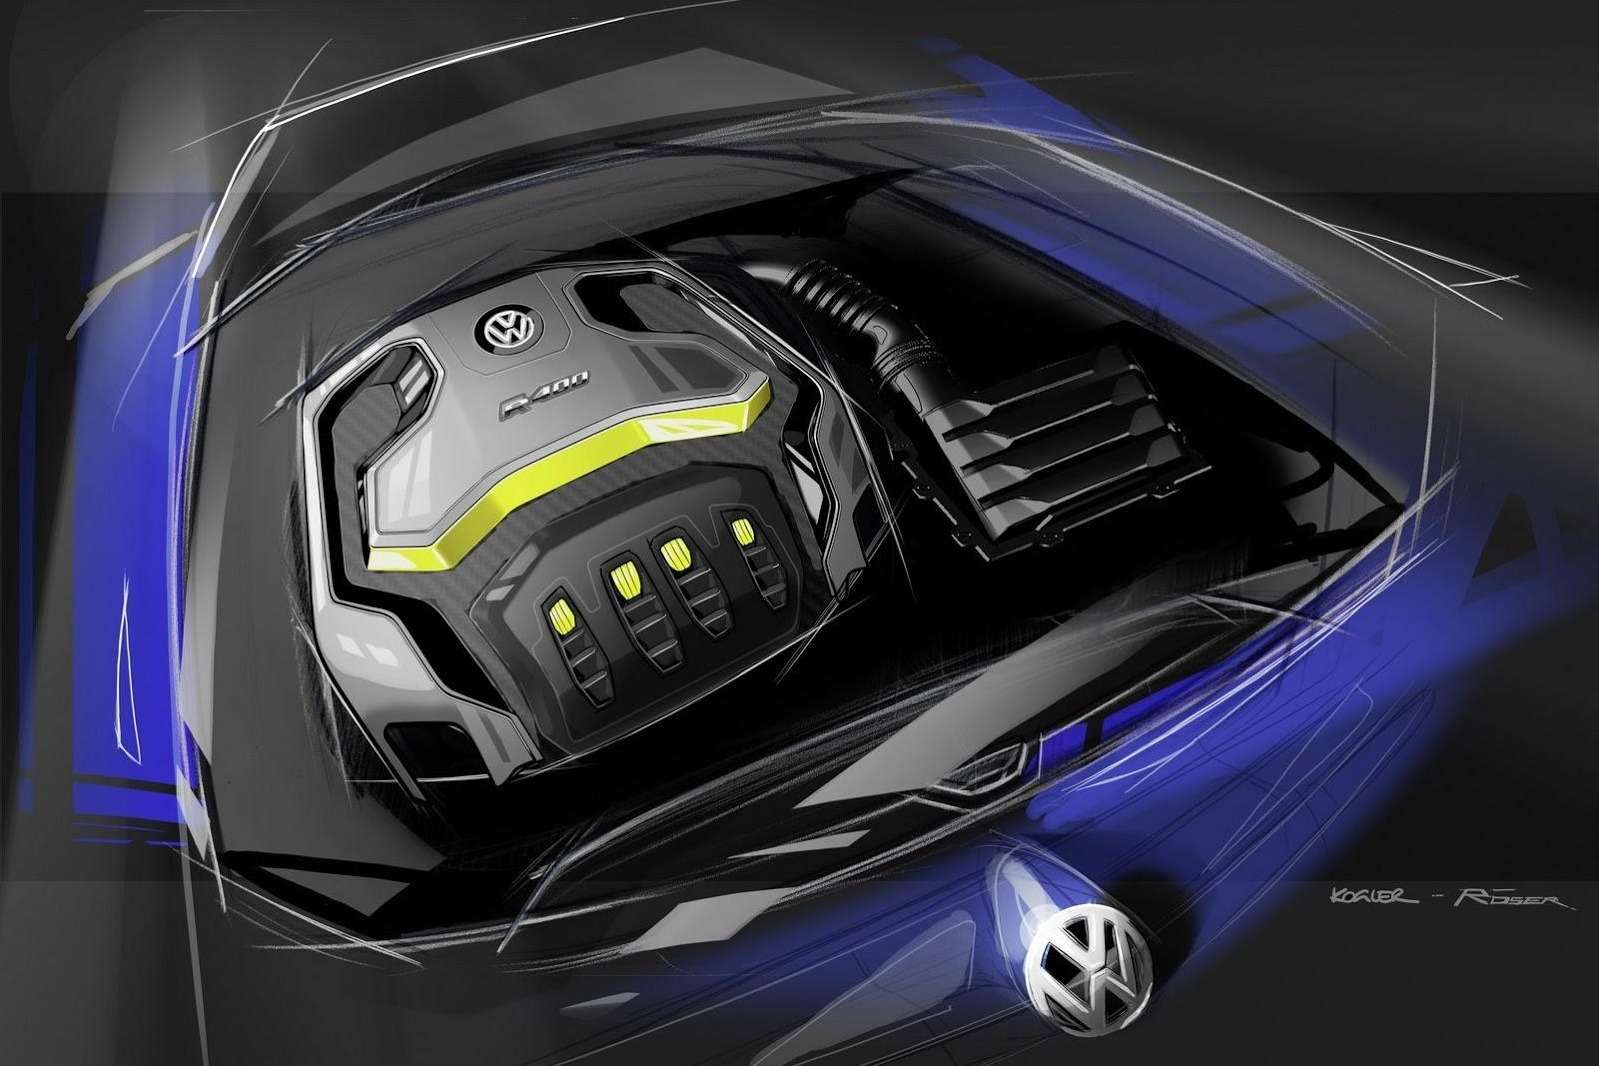 Скетч концепта Volkswagen Golf R 400 Concept